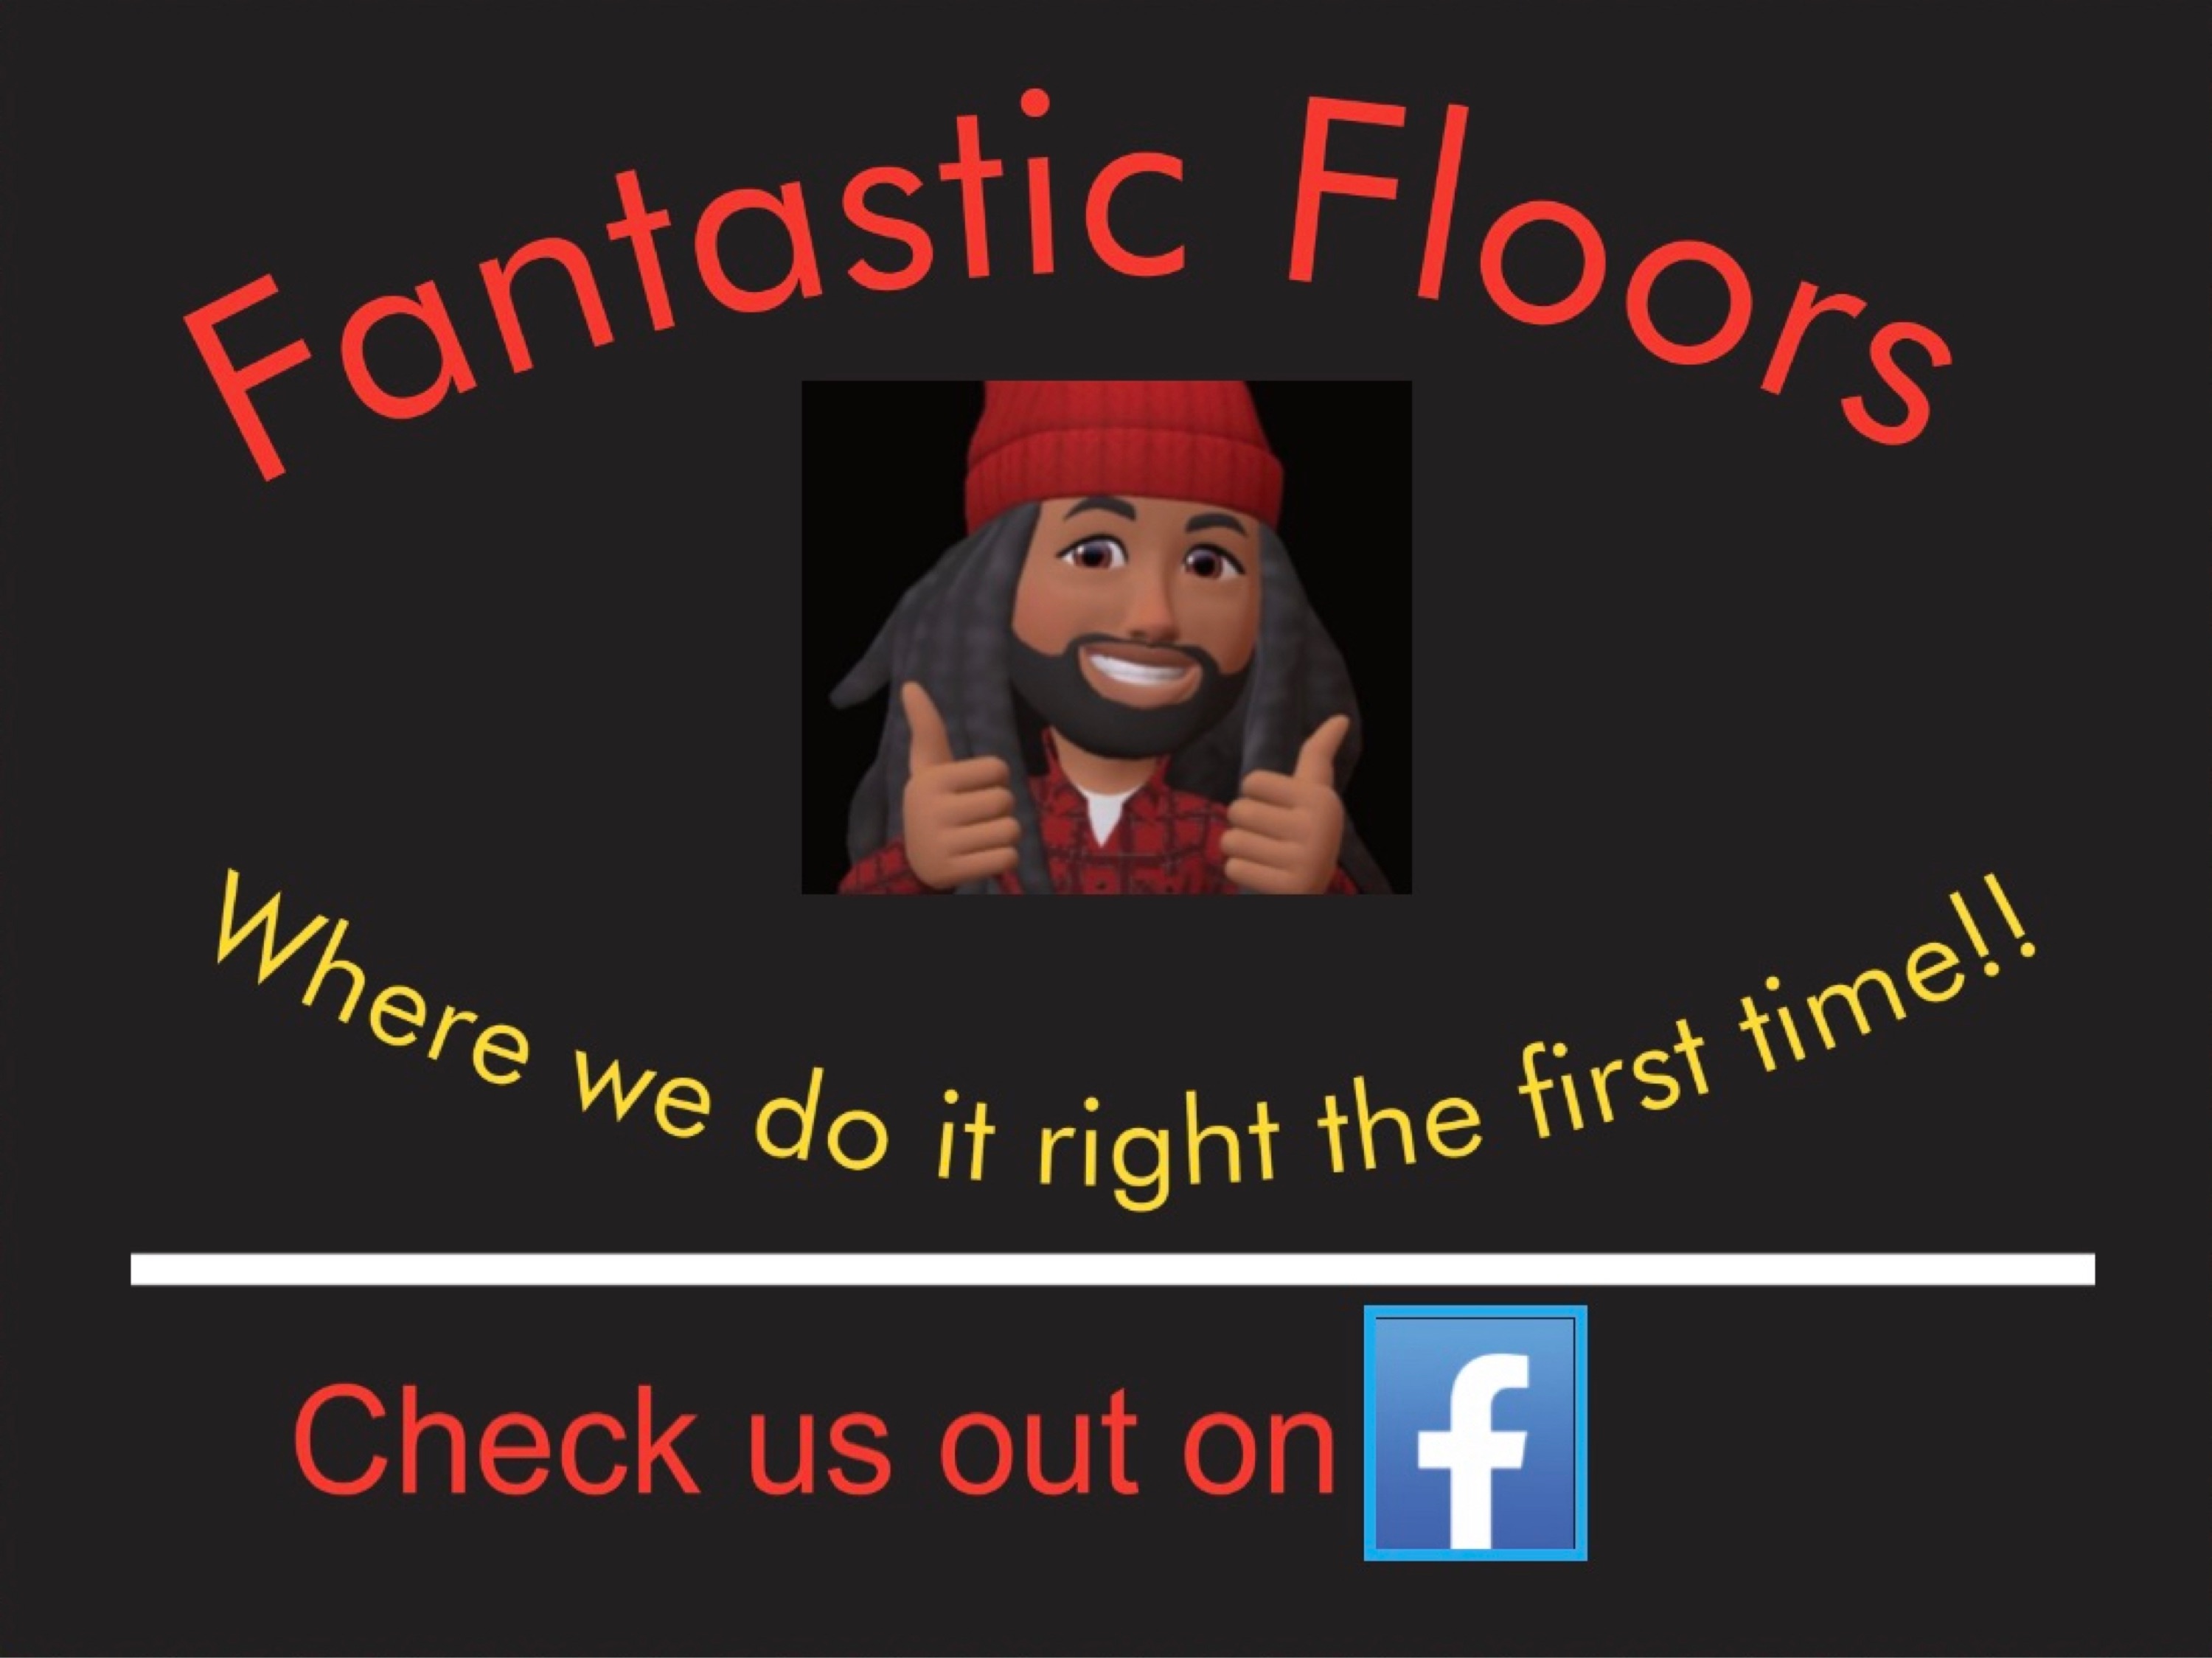 Fantastic Floors Logo